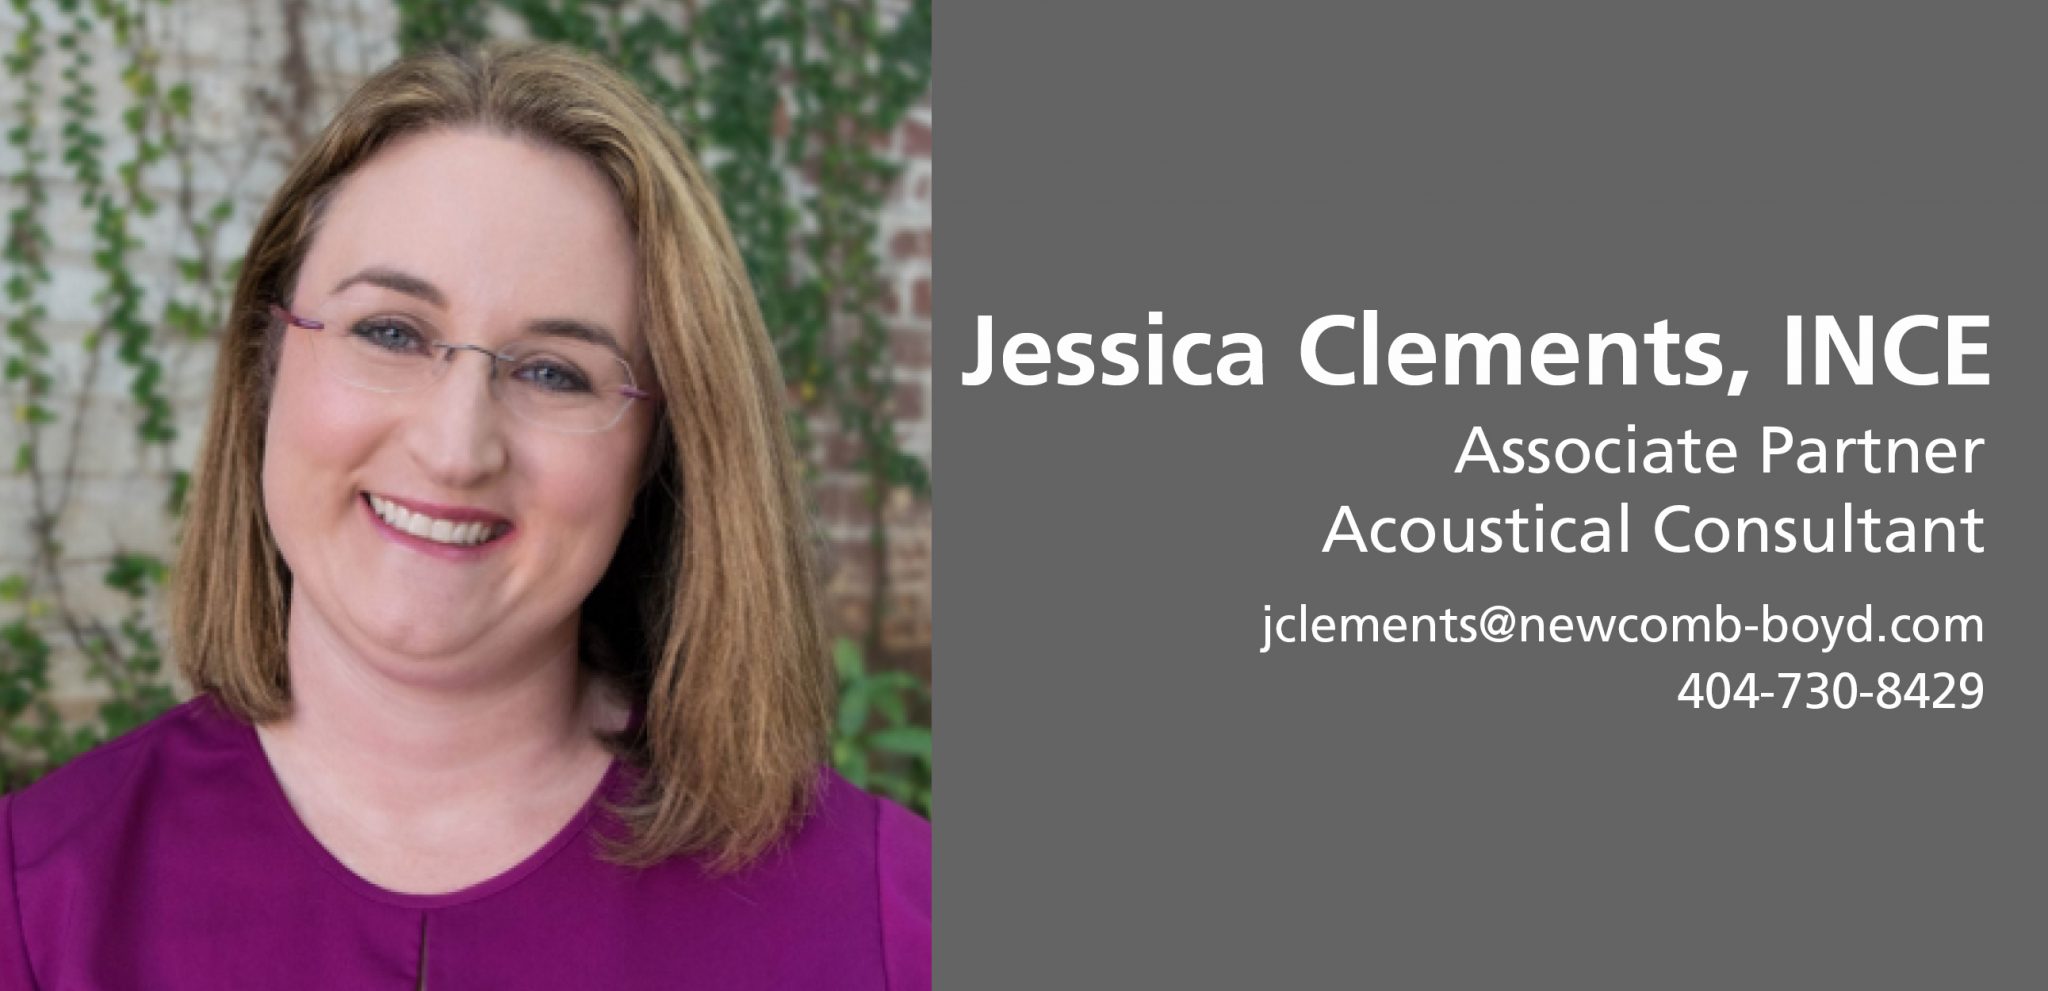 Jessica Clements